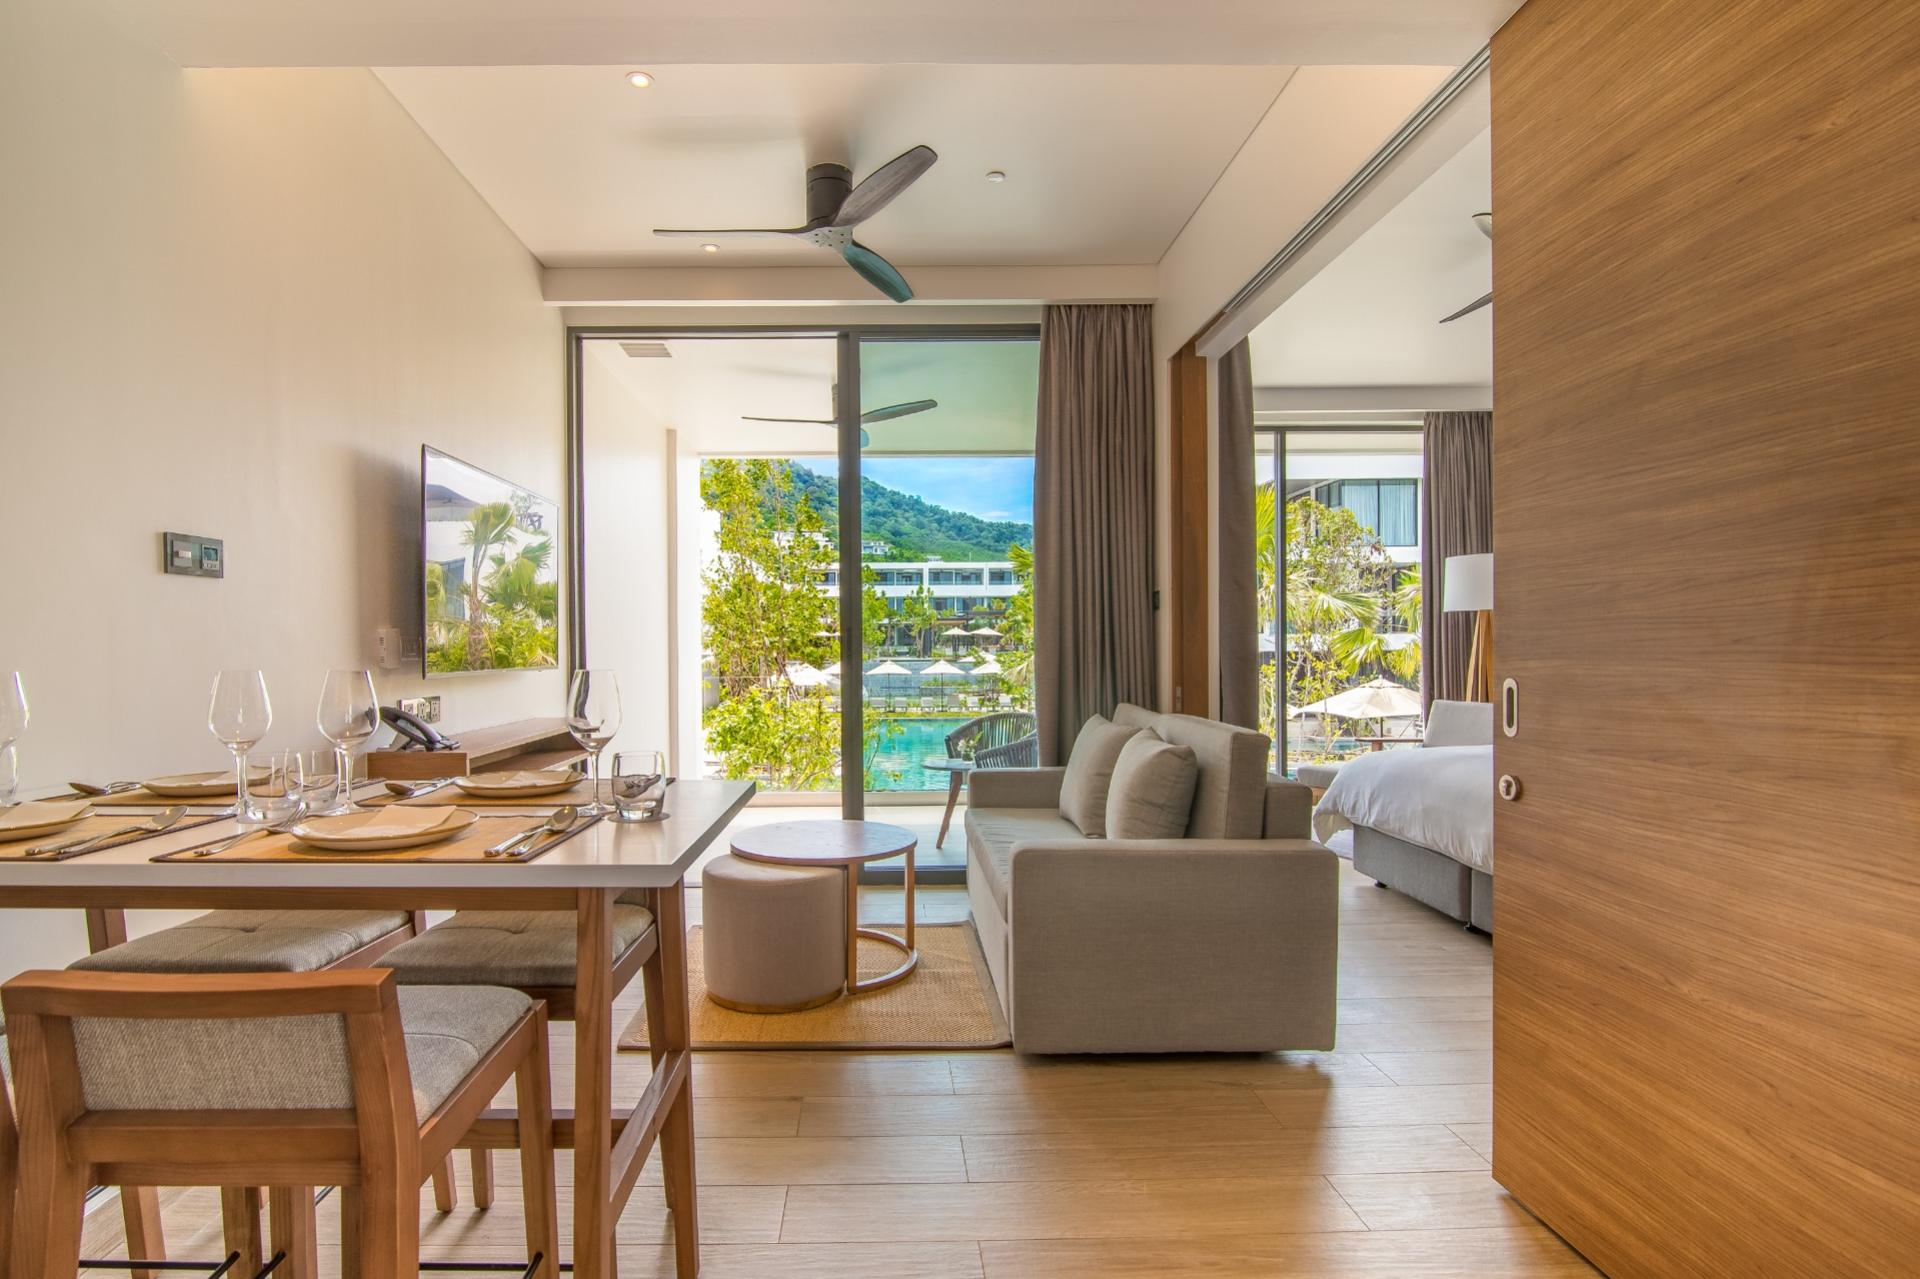 stay-wellbeing-and-lifestyle-resort-one-bedroom-suite-garden-viewstay-roomview1-2jpg